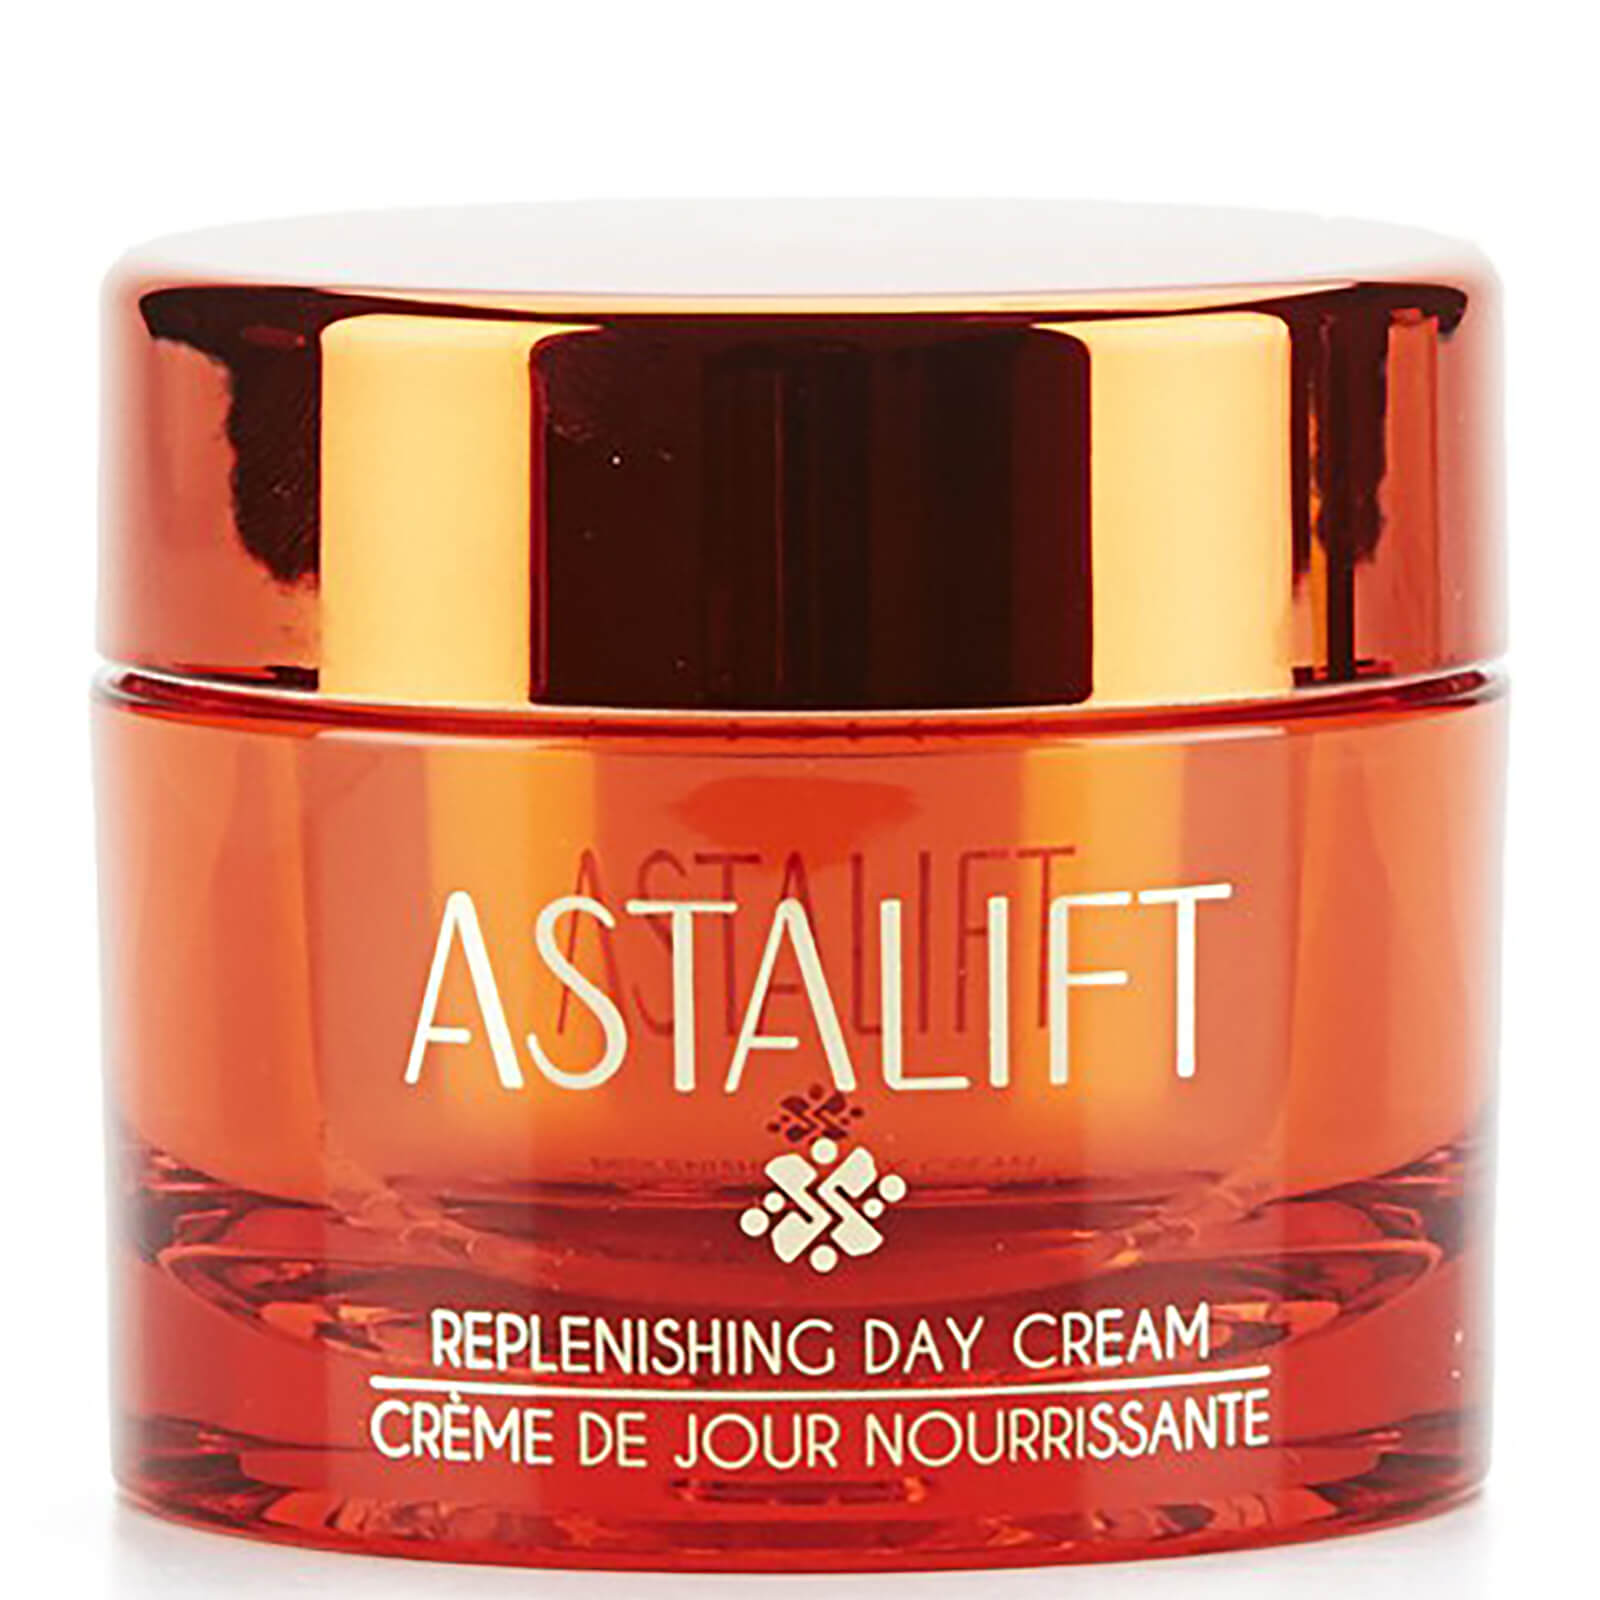 Crema rellenante de día Astalift (30g)